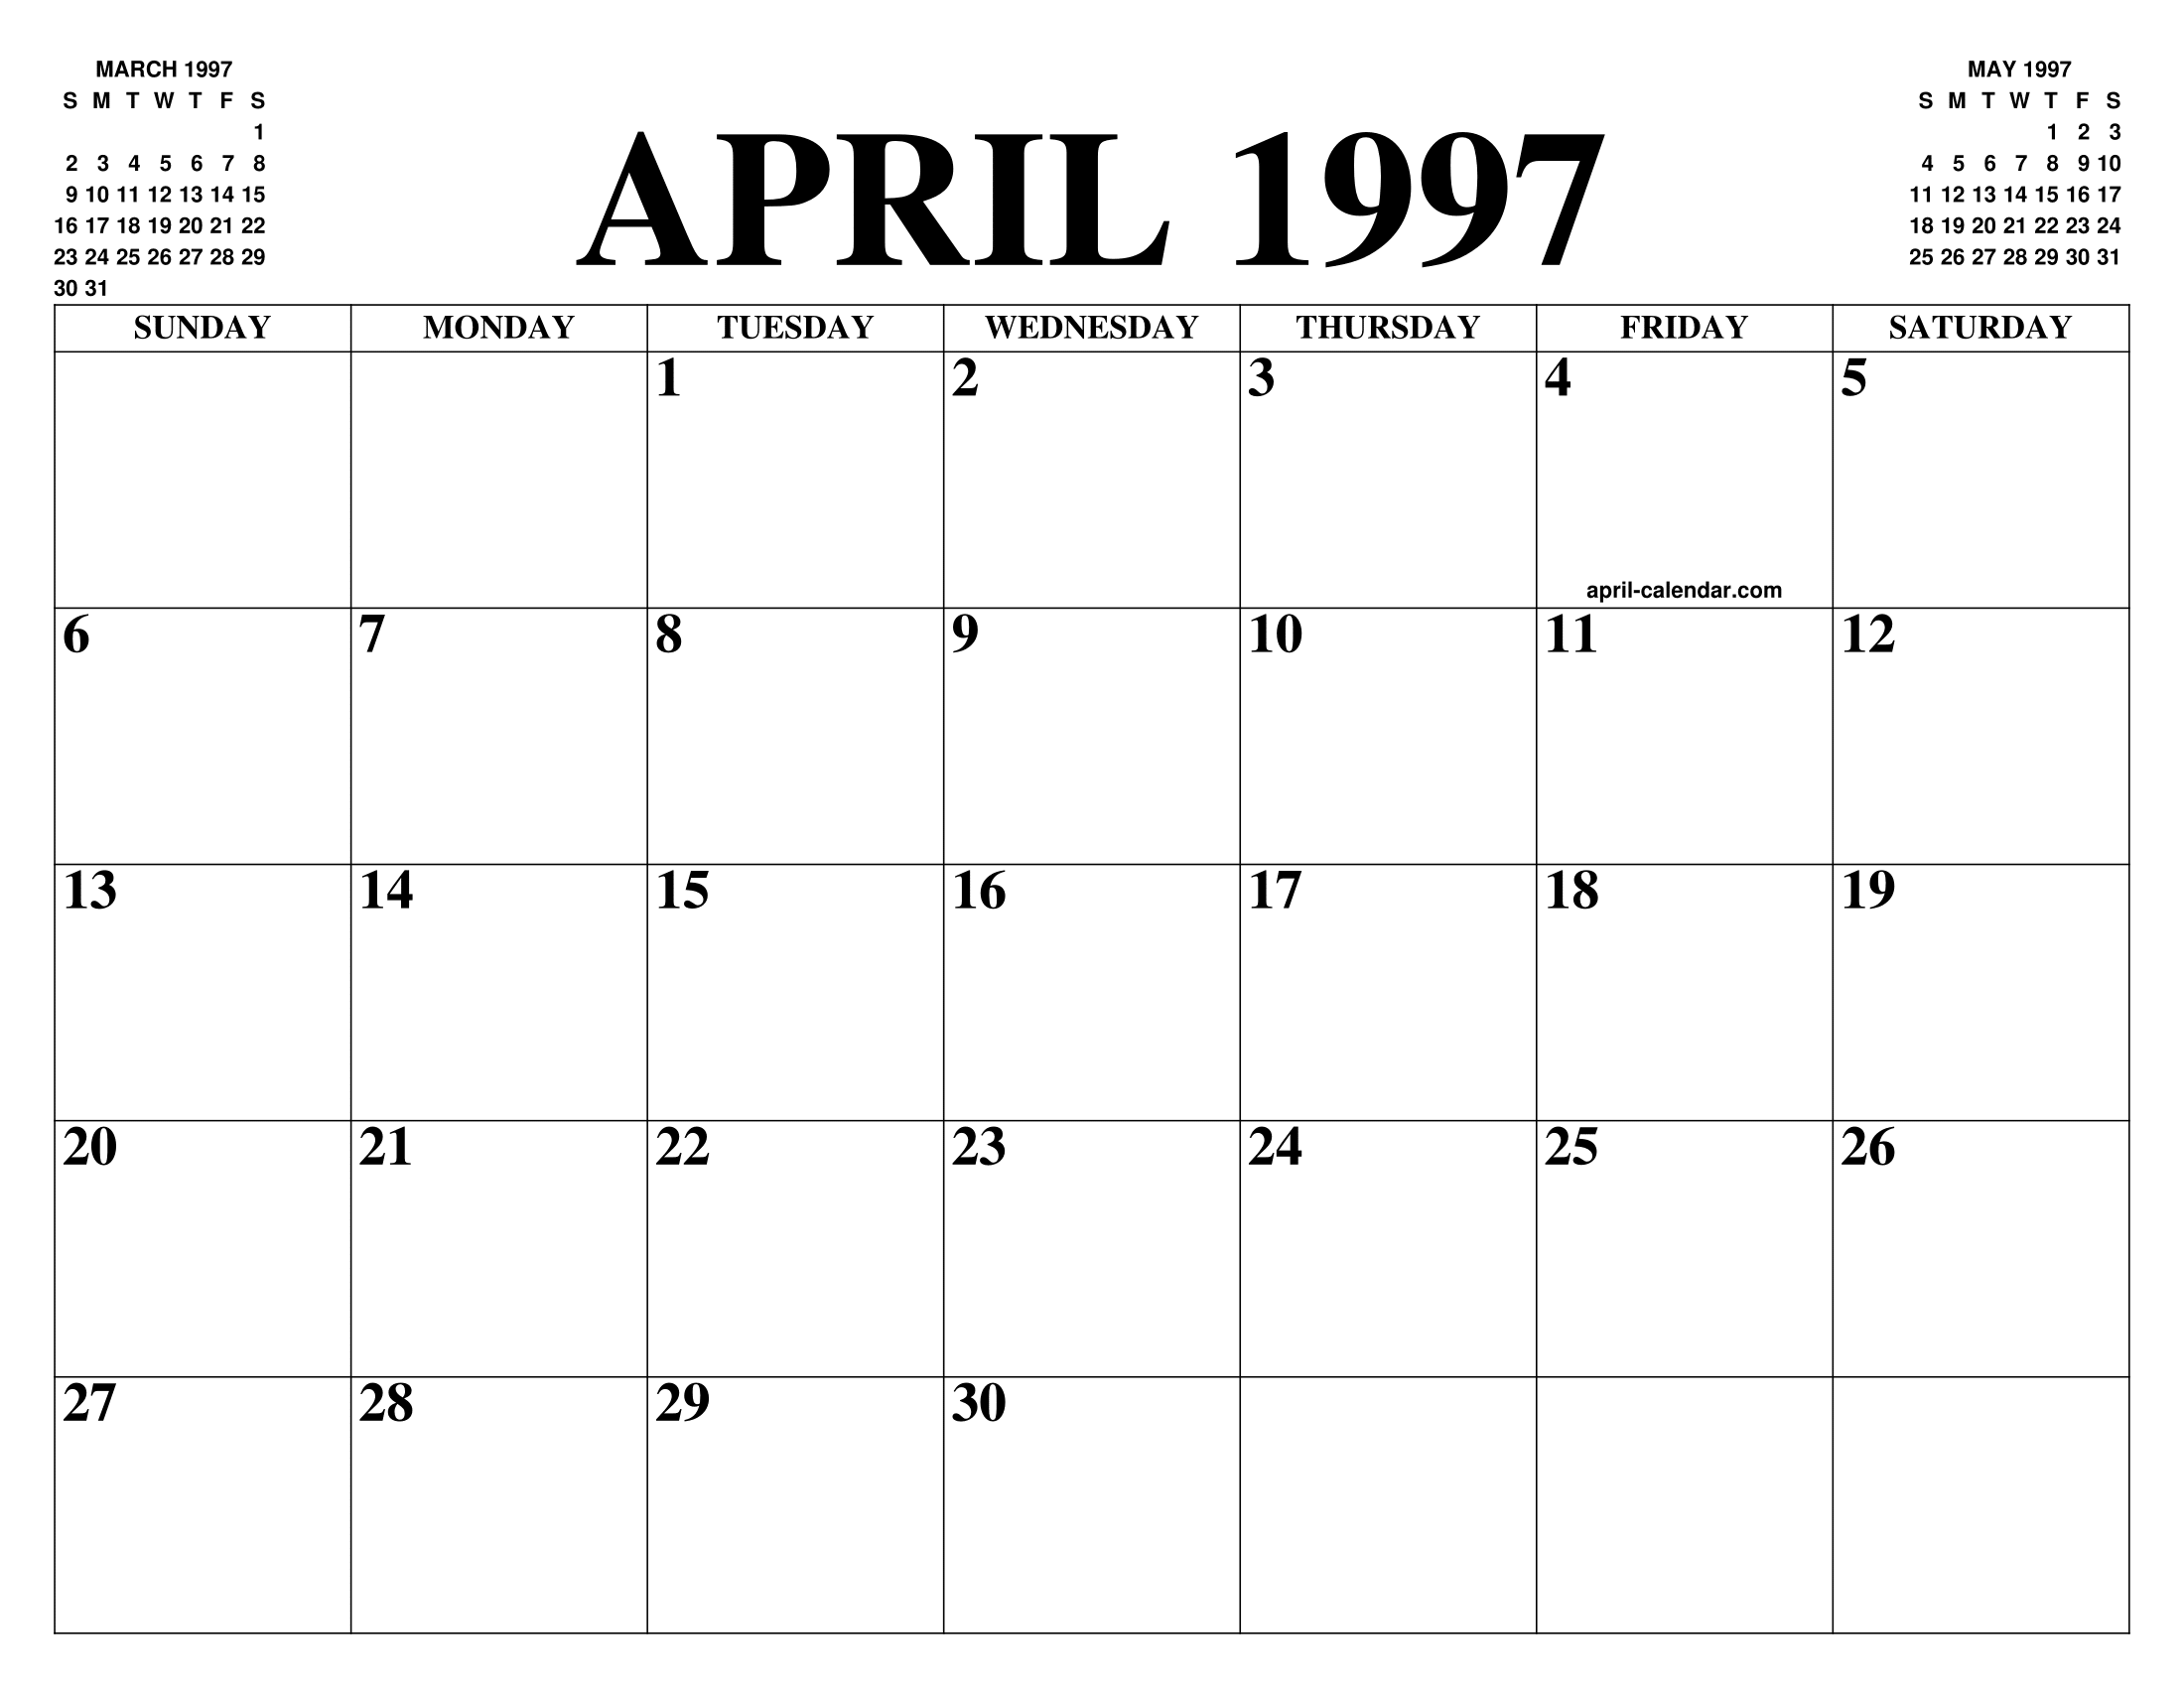 APRIL 1997 CALENDAR OF THE MONTH: FREE PRINTABLE APRIL CALENDAR OF THE